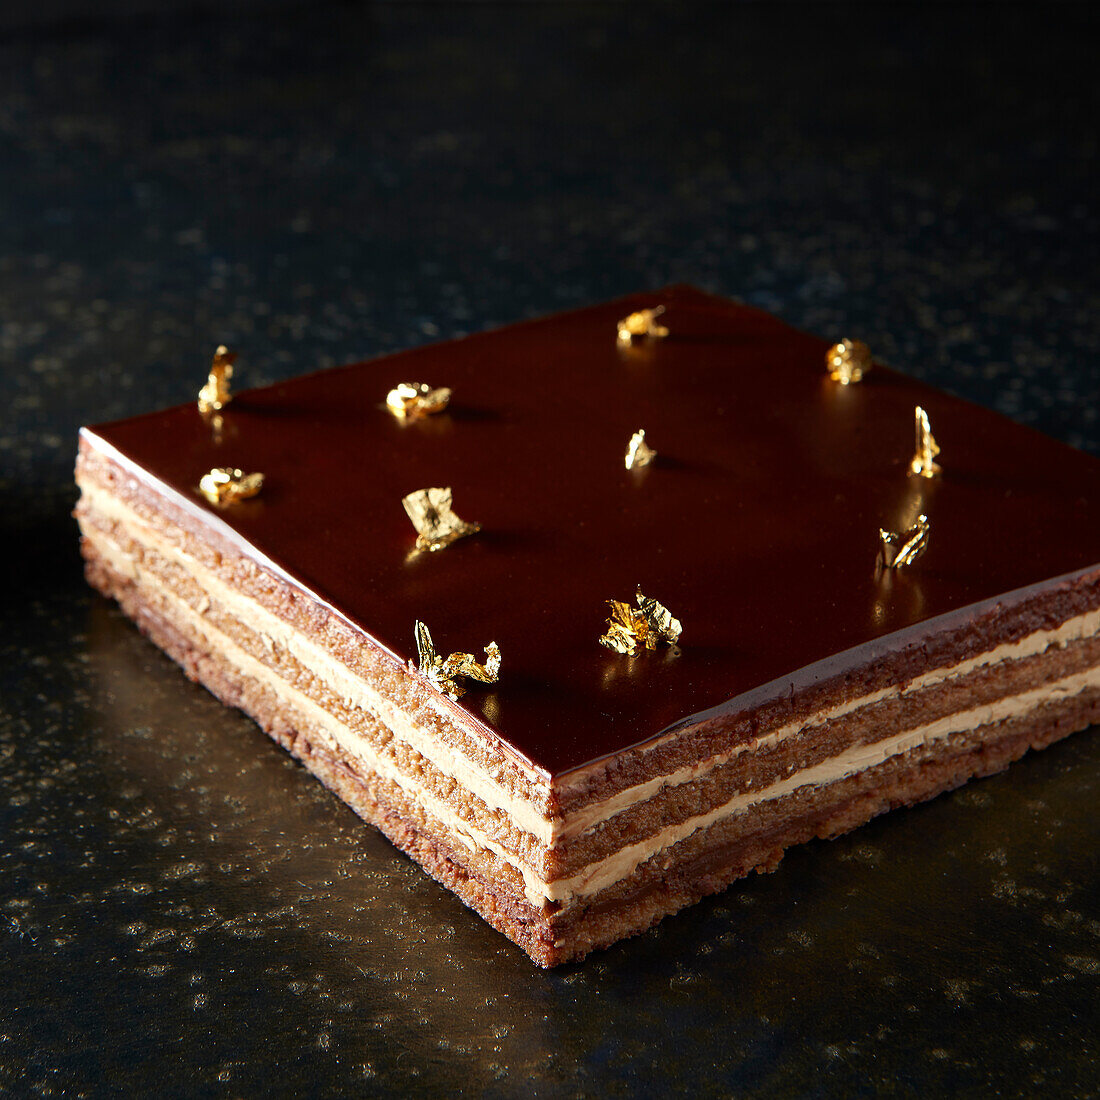 Opéra (Französische Mandel-Biskuit-Torte mit Schokoladenglasur)